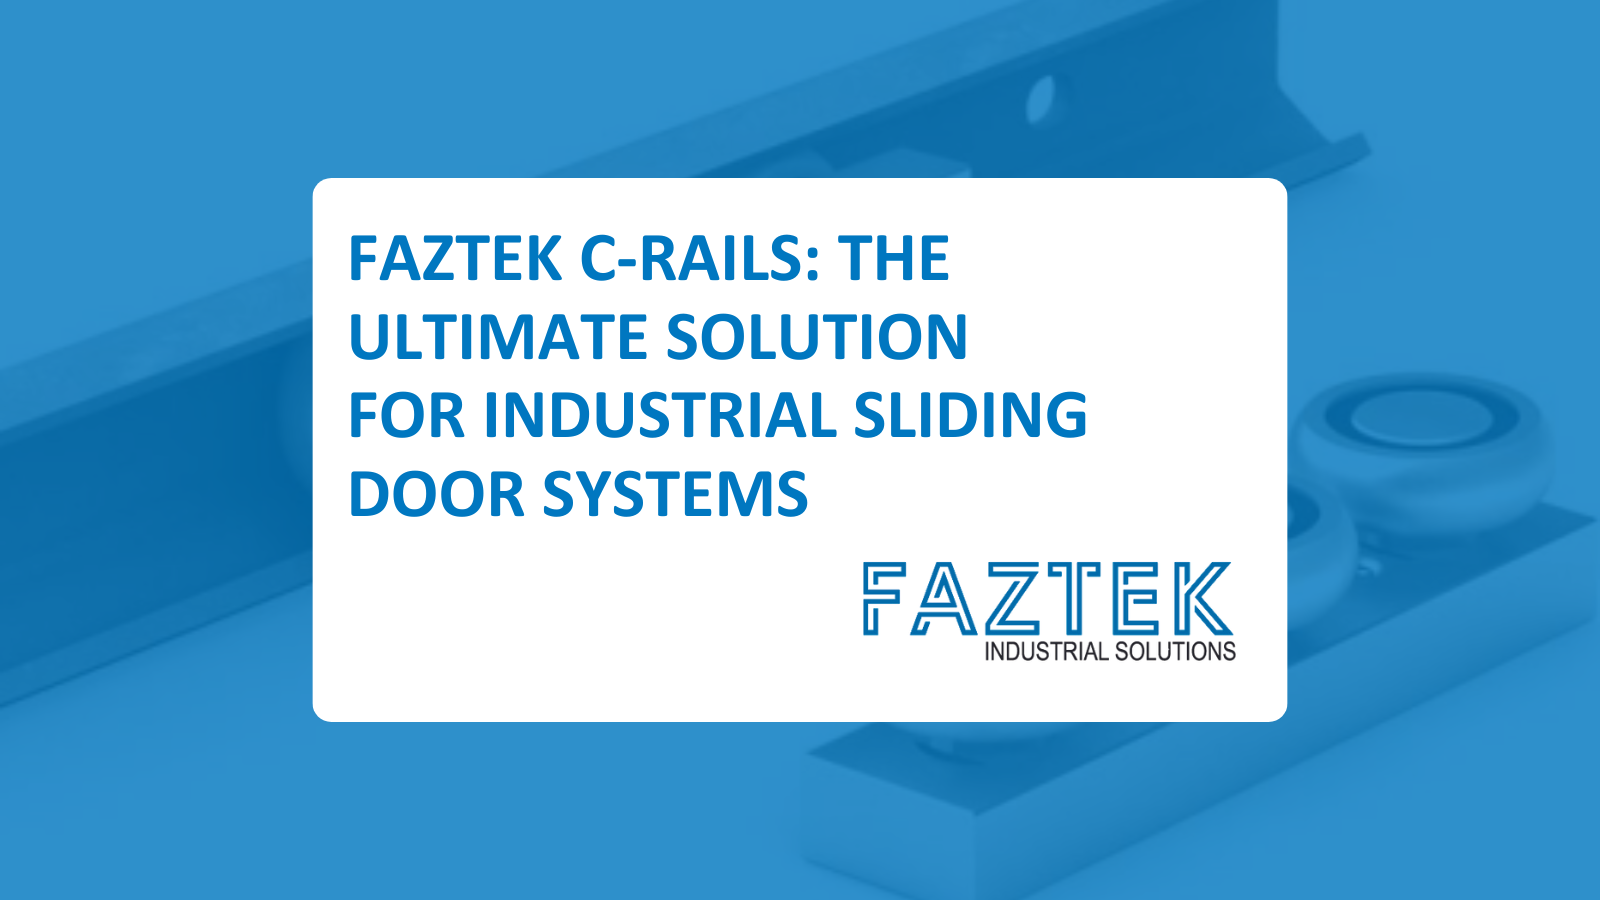 Faztek C-Rails: The Ultimate Solution for Industrial Sliding Door Systems